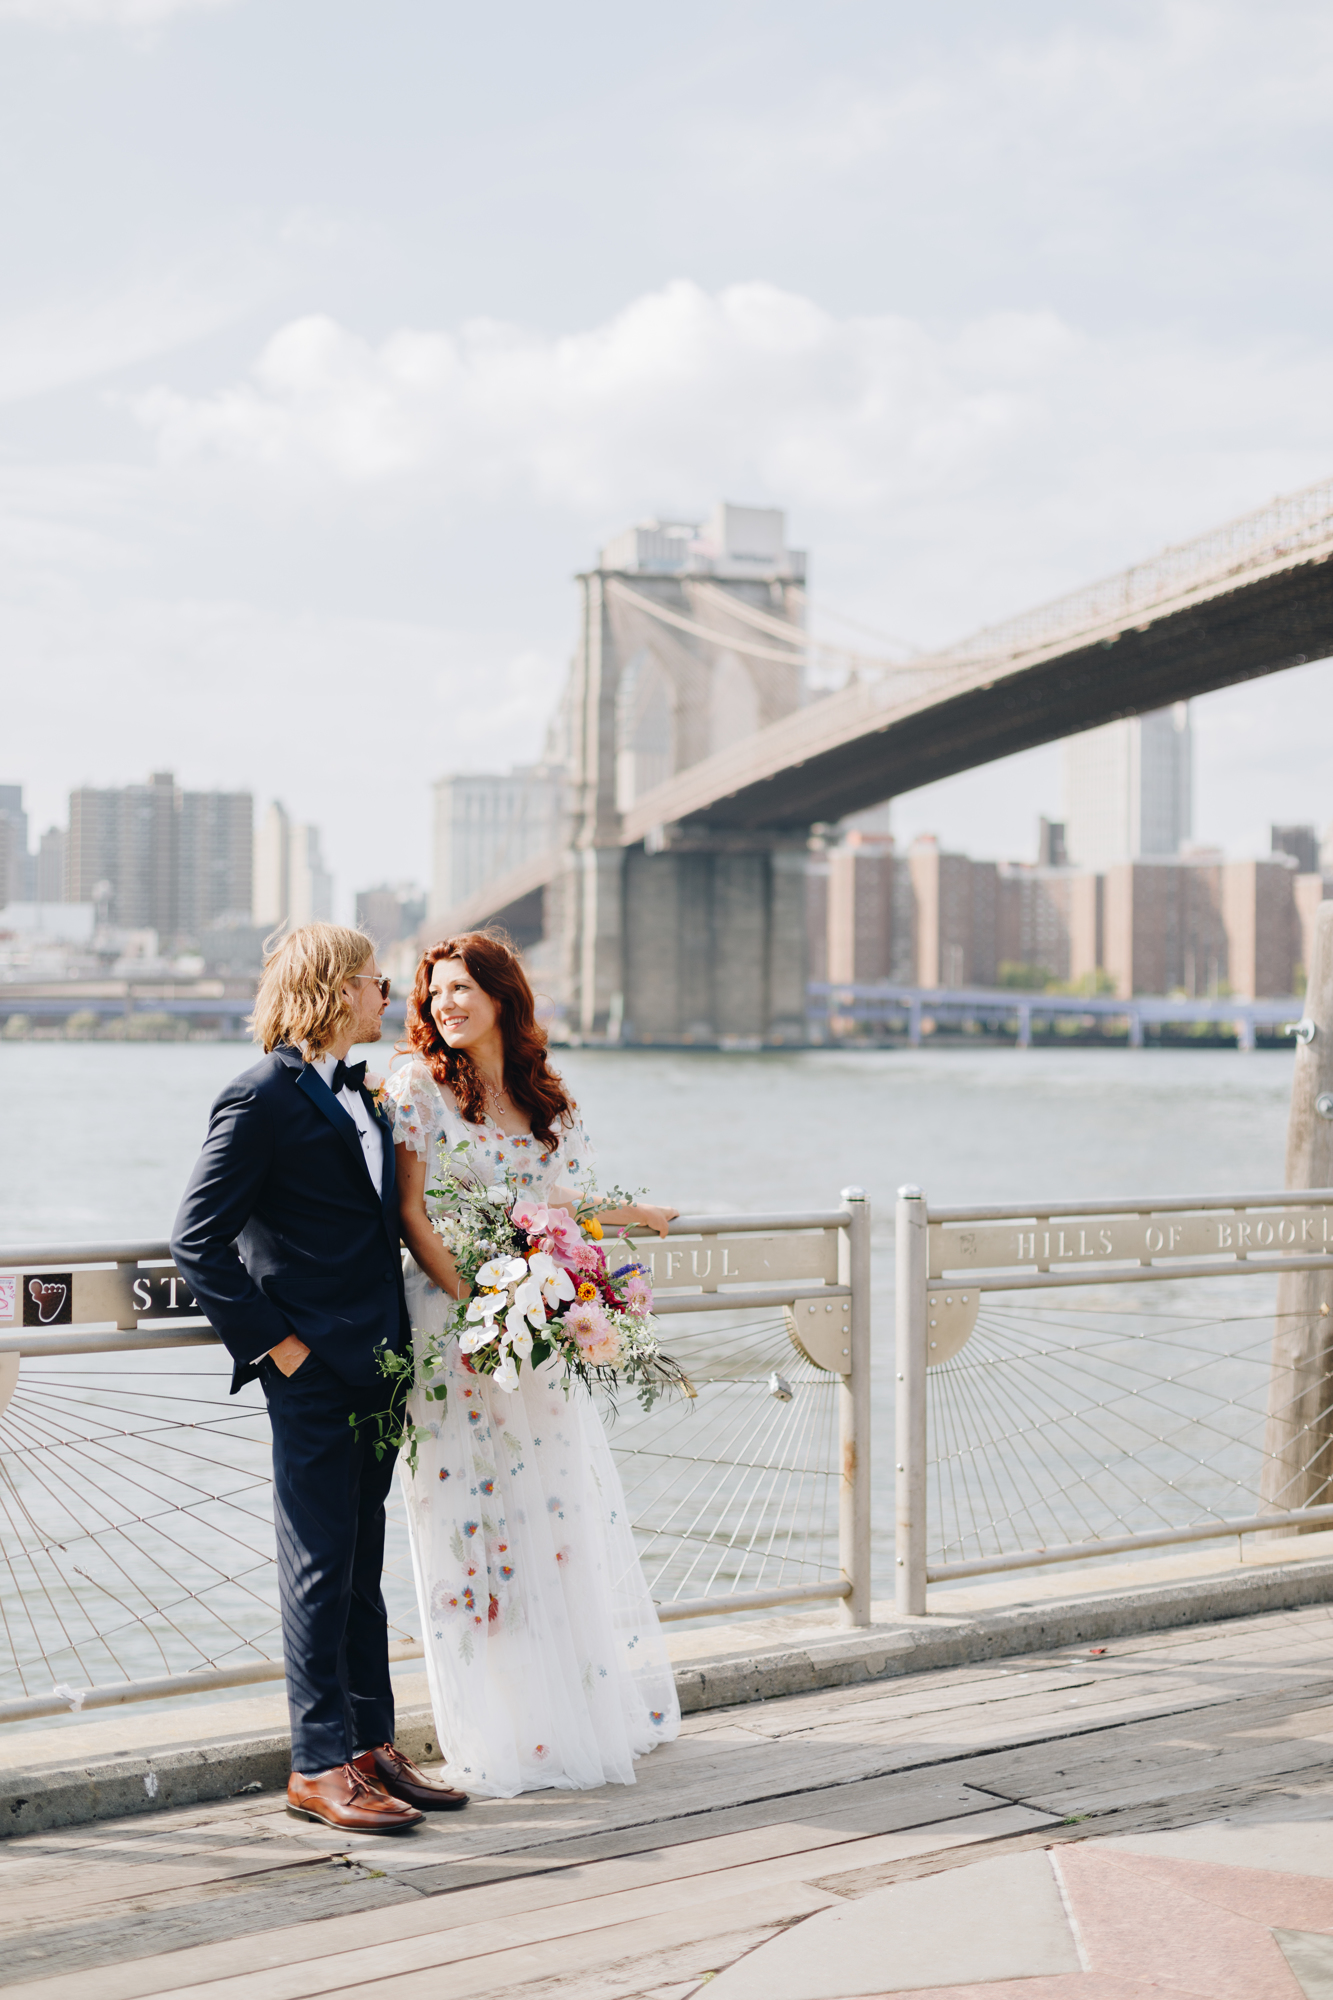 Brooklyn Bridge Park Pier A wedding photos